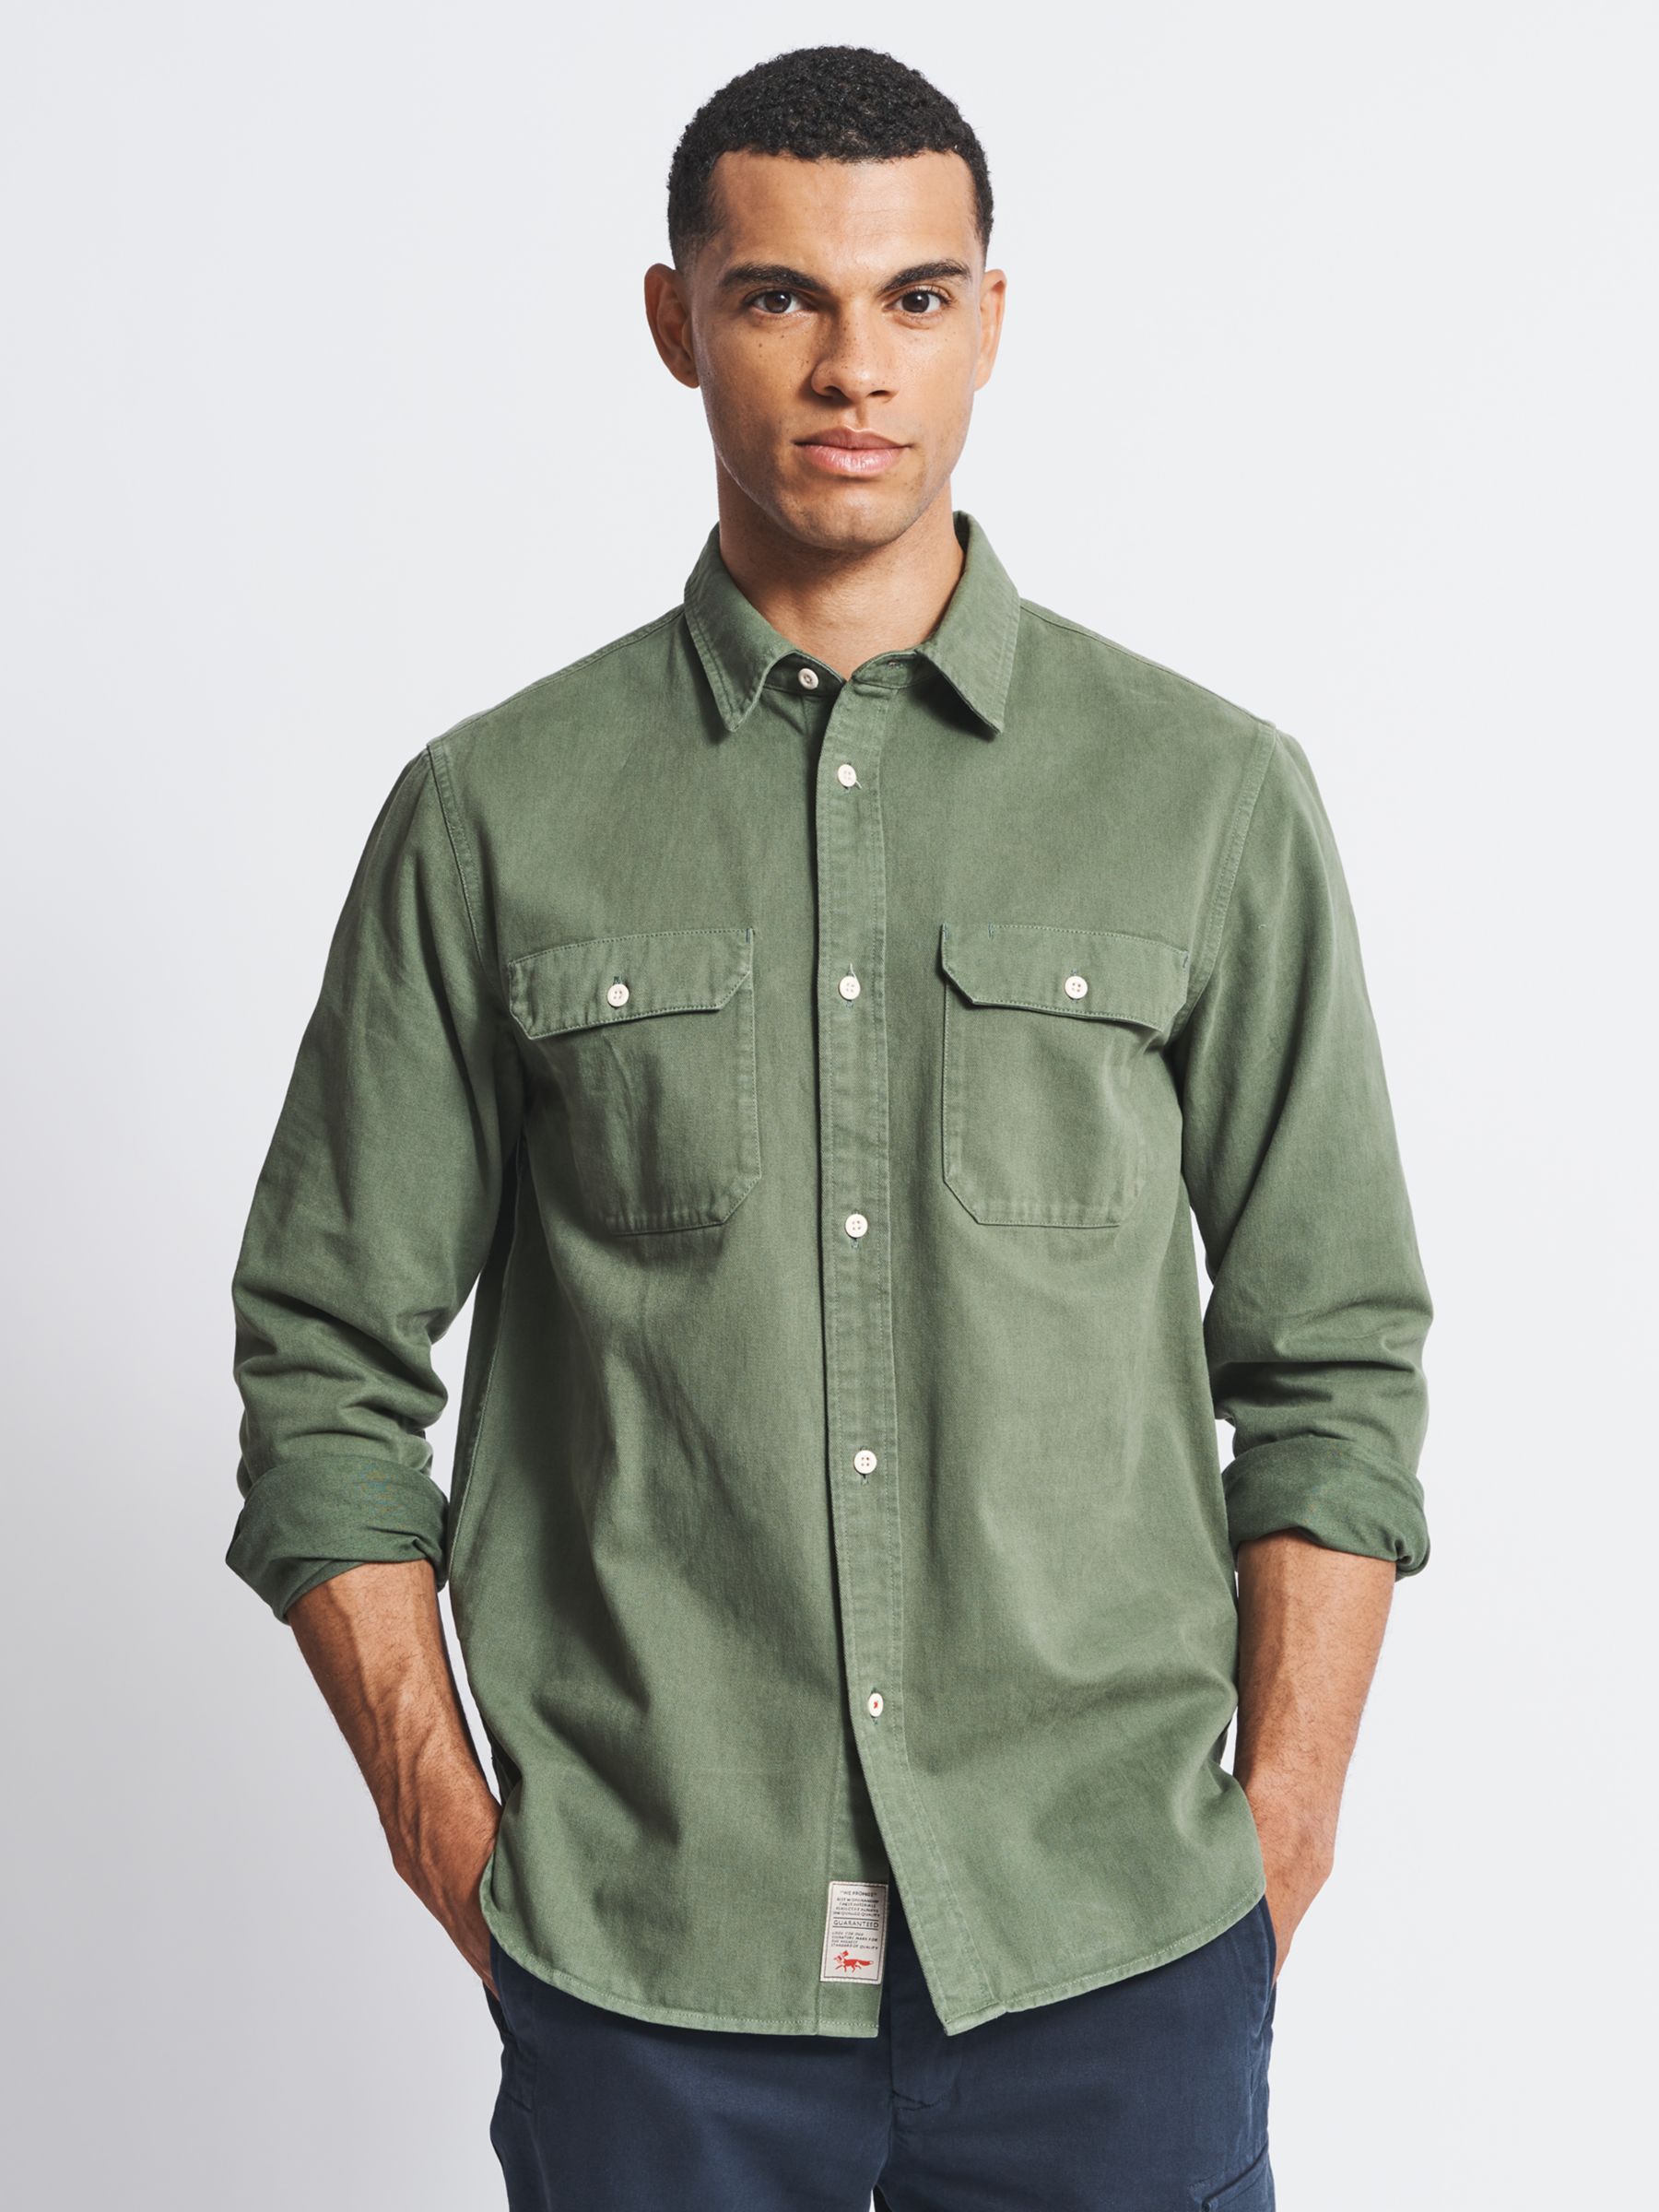 Aubin Normanby Cotton Twill Shirt, Khaki, S